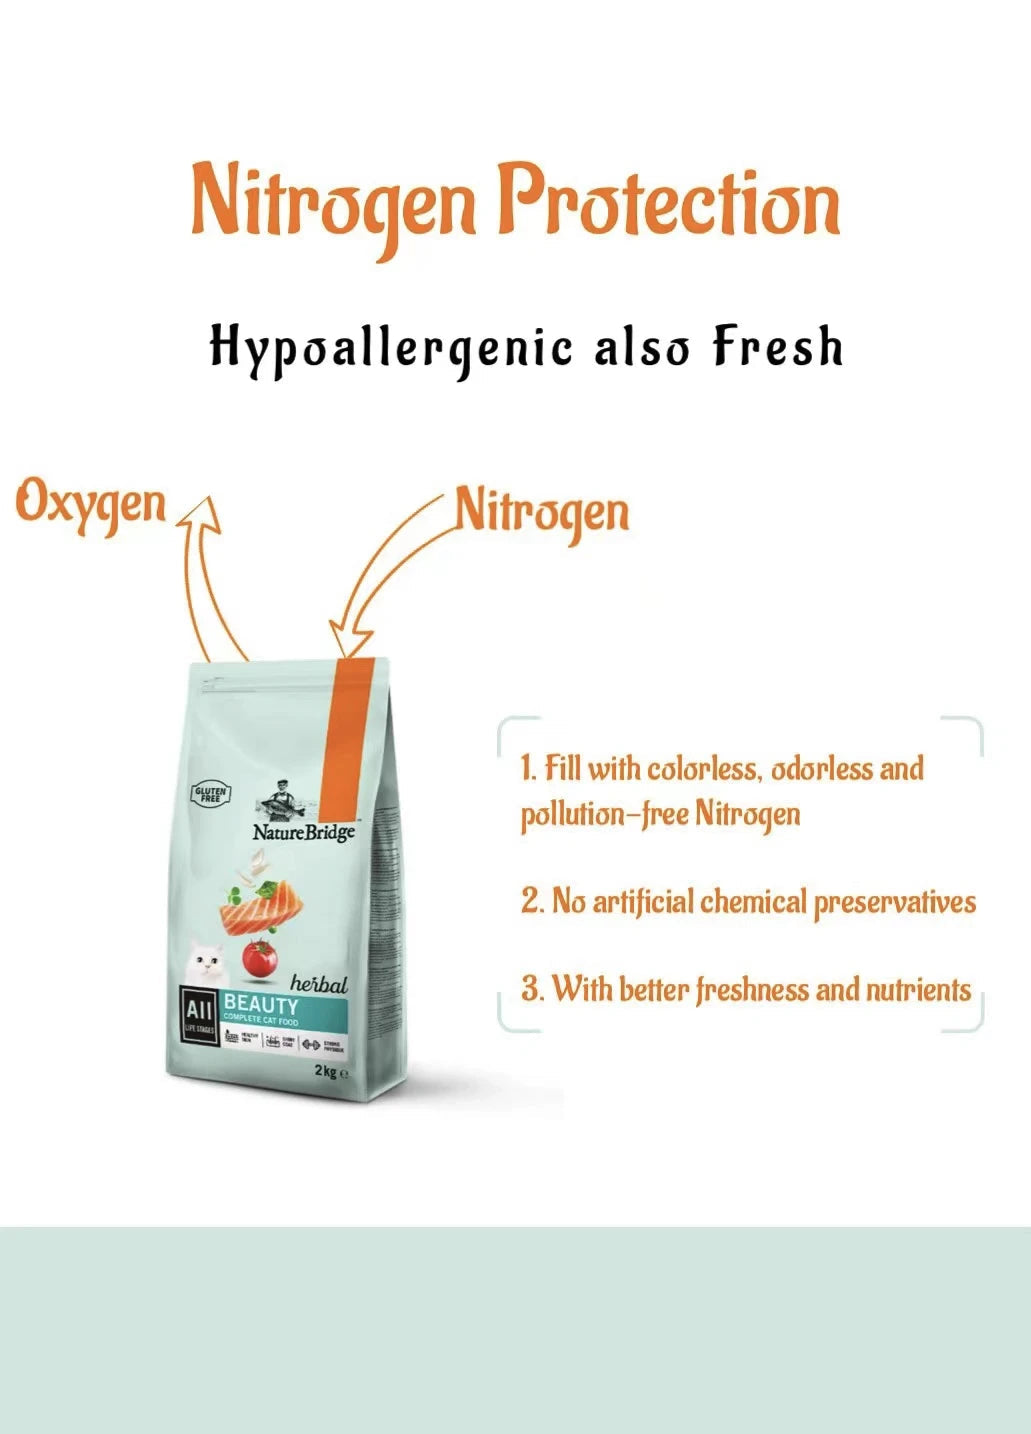 NatureBridge-Hypoallergenic Cat Dry Food - Beauty Cat- Nitrogen Protection